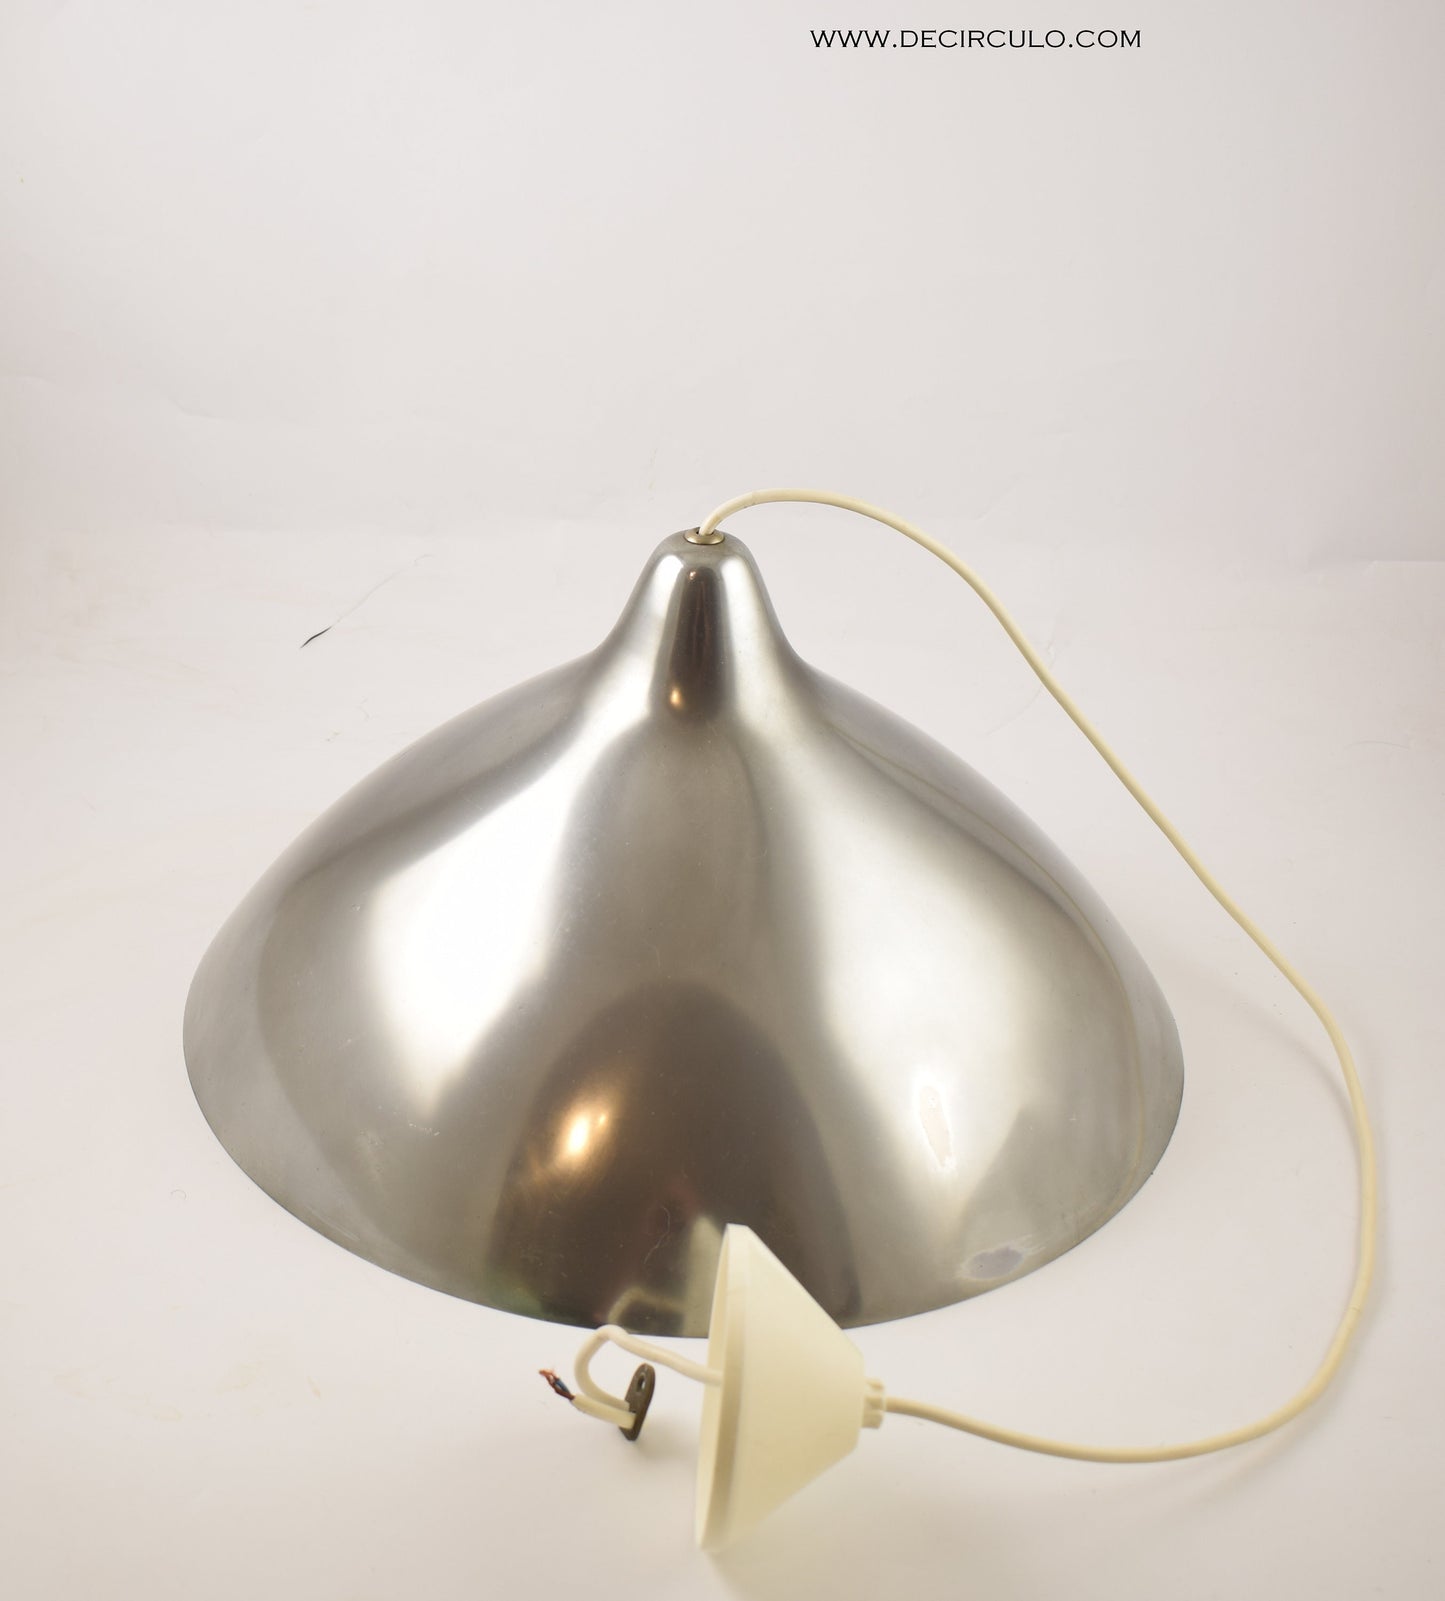 Stockmann Orno design Lisa Johansson-Pape aluminium pendant lamp made in finland 1950-1959